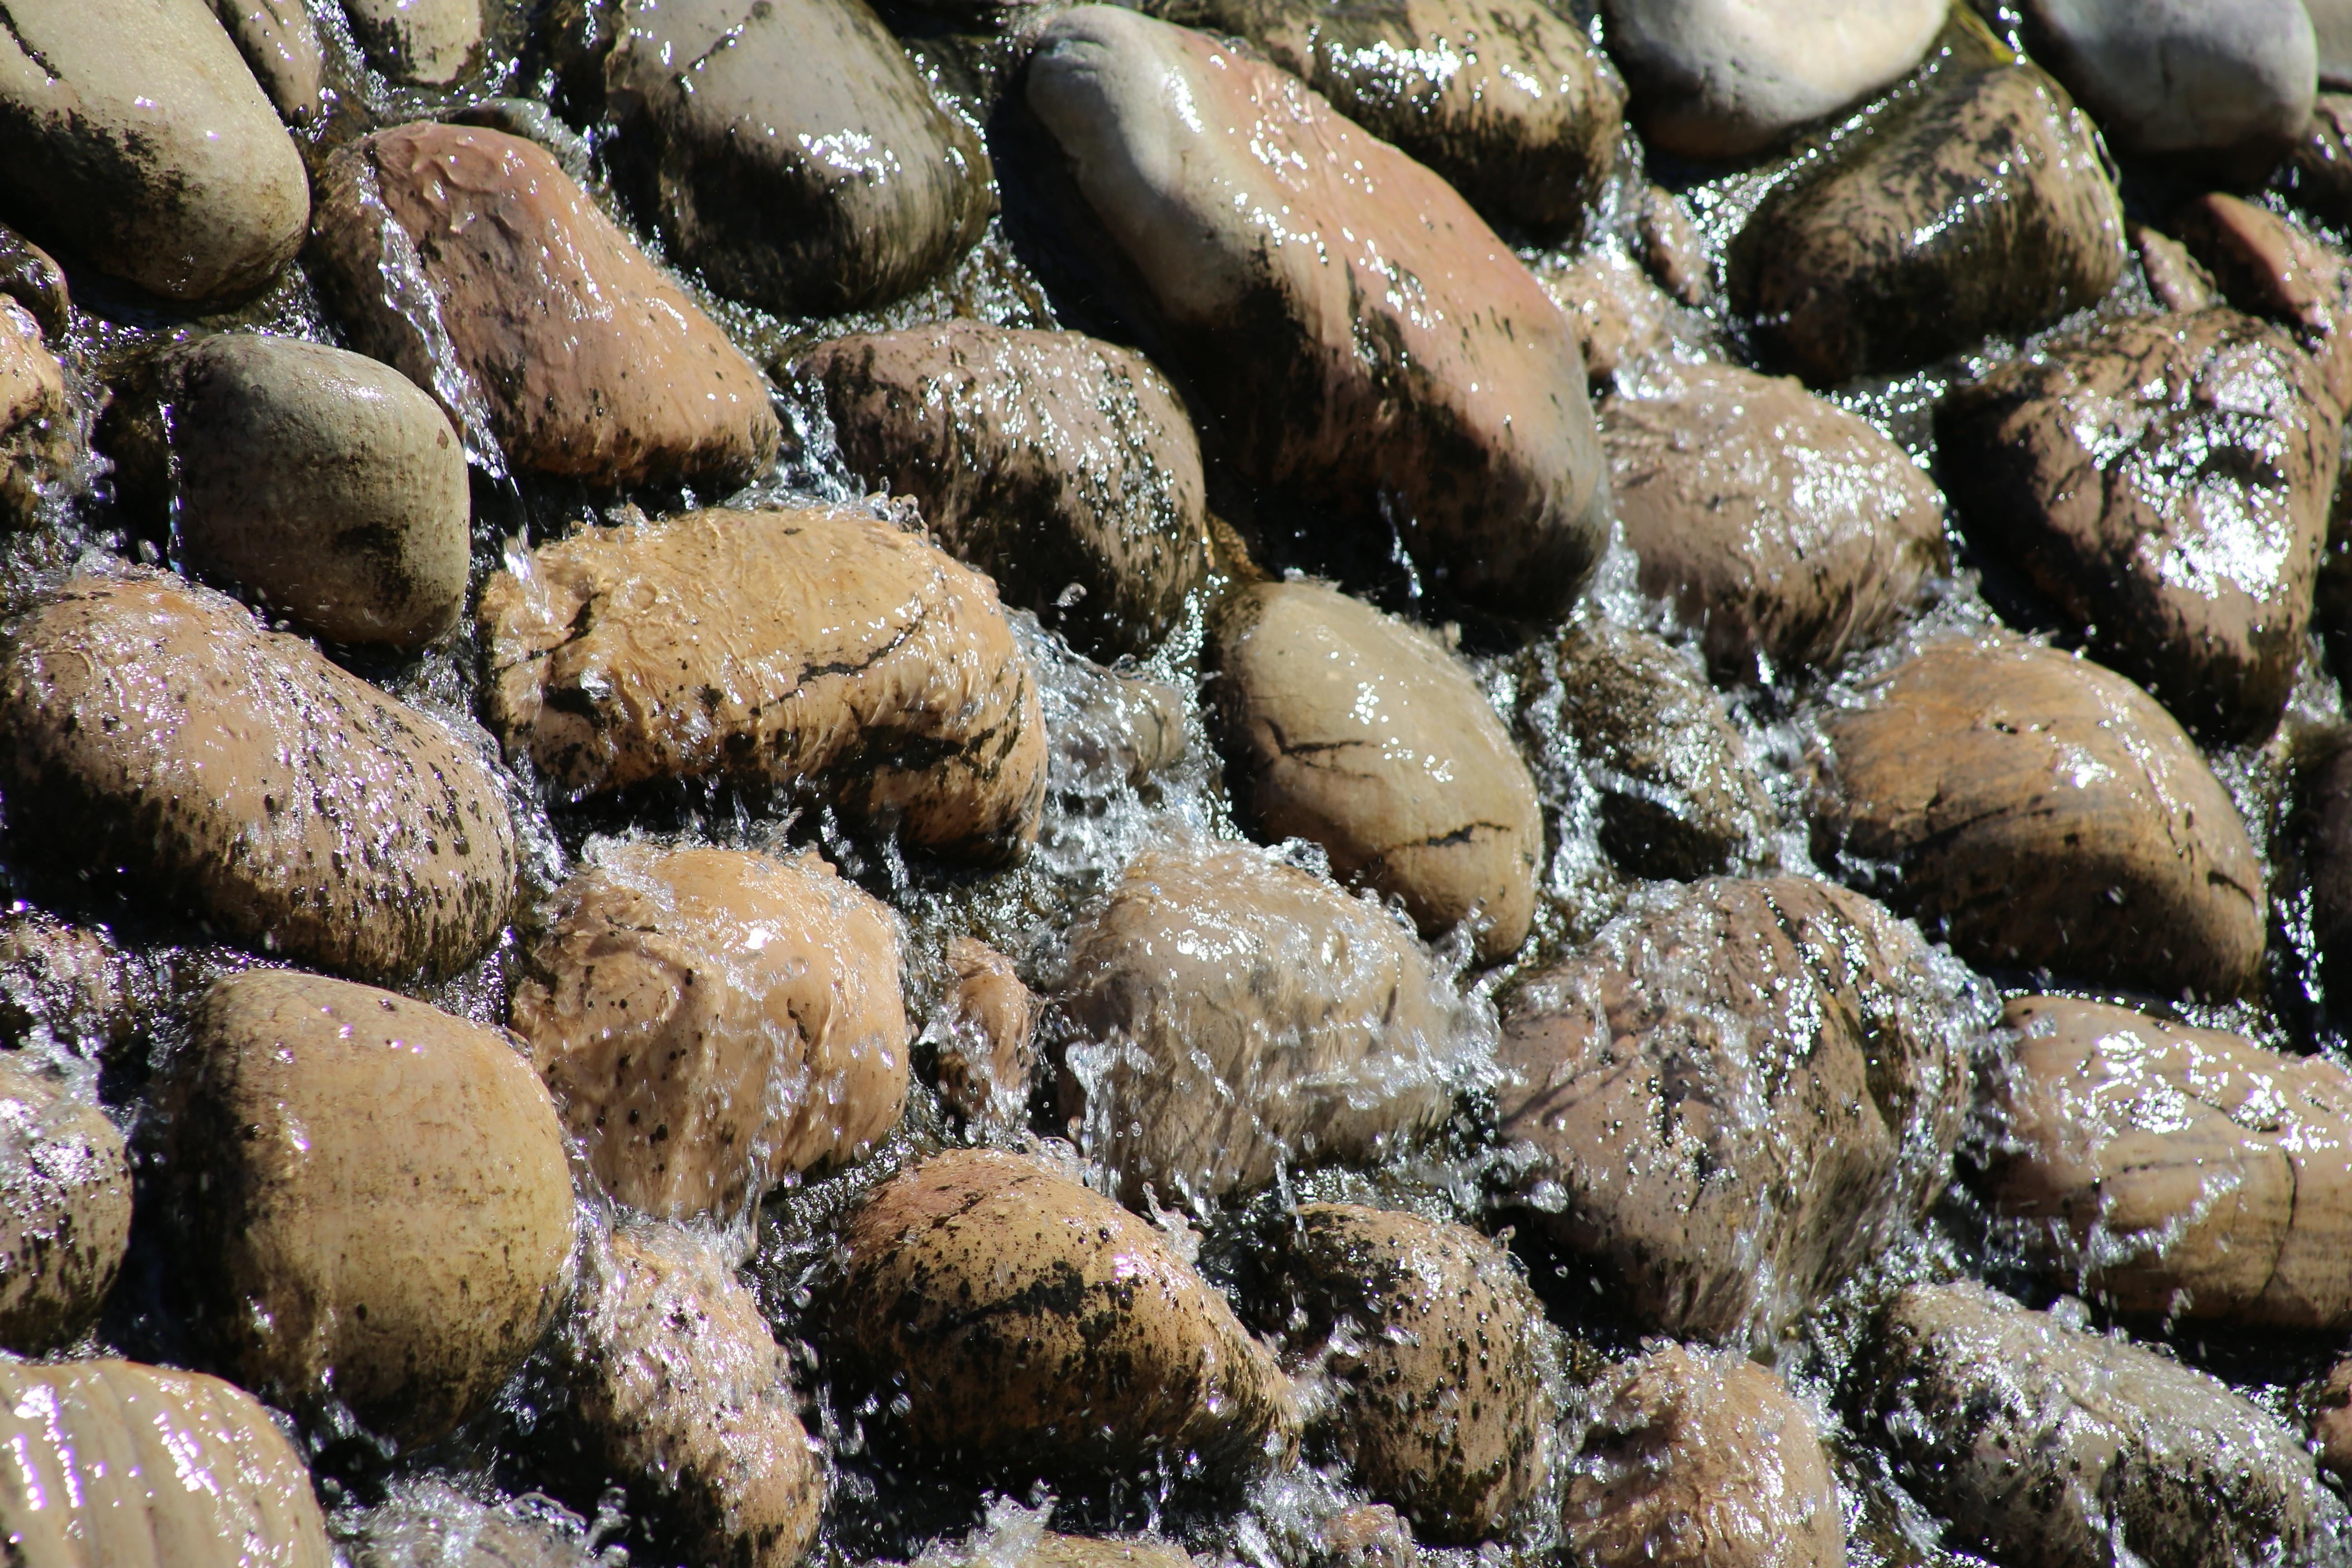 Wet stone. Текстура мокрого камня. Мокрый камень. Мокрая галька. Камни в воде.